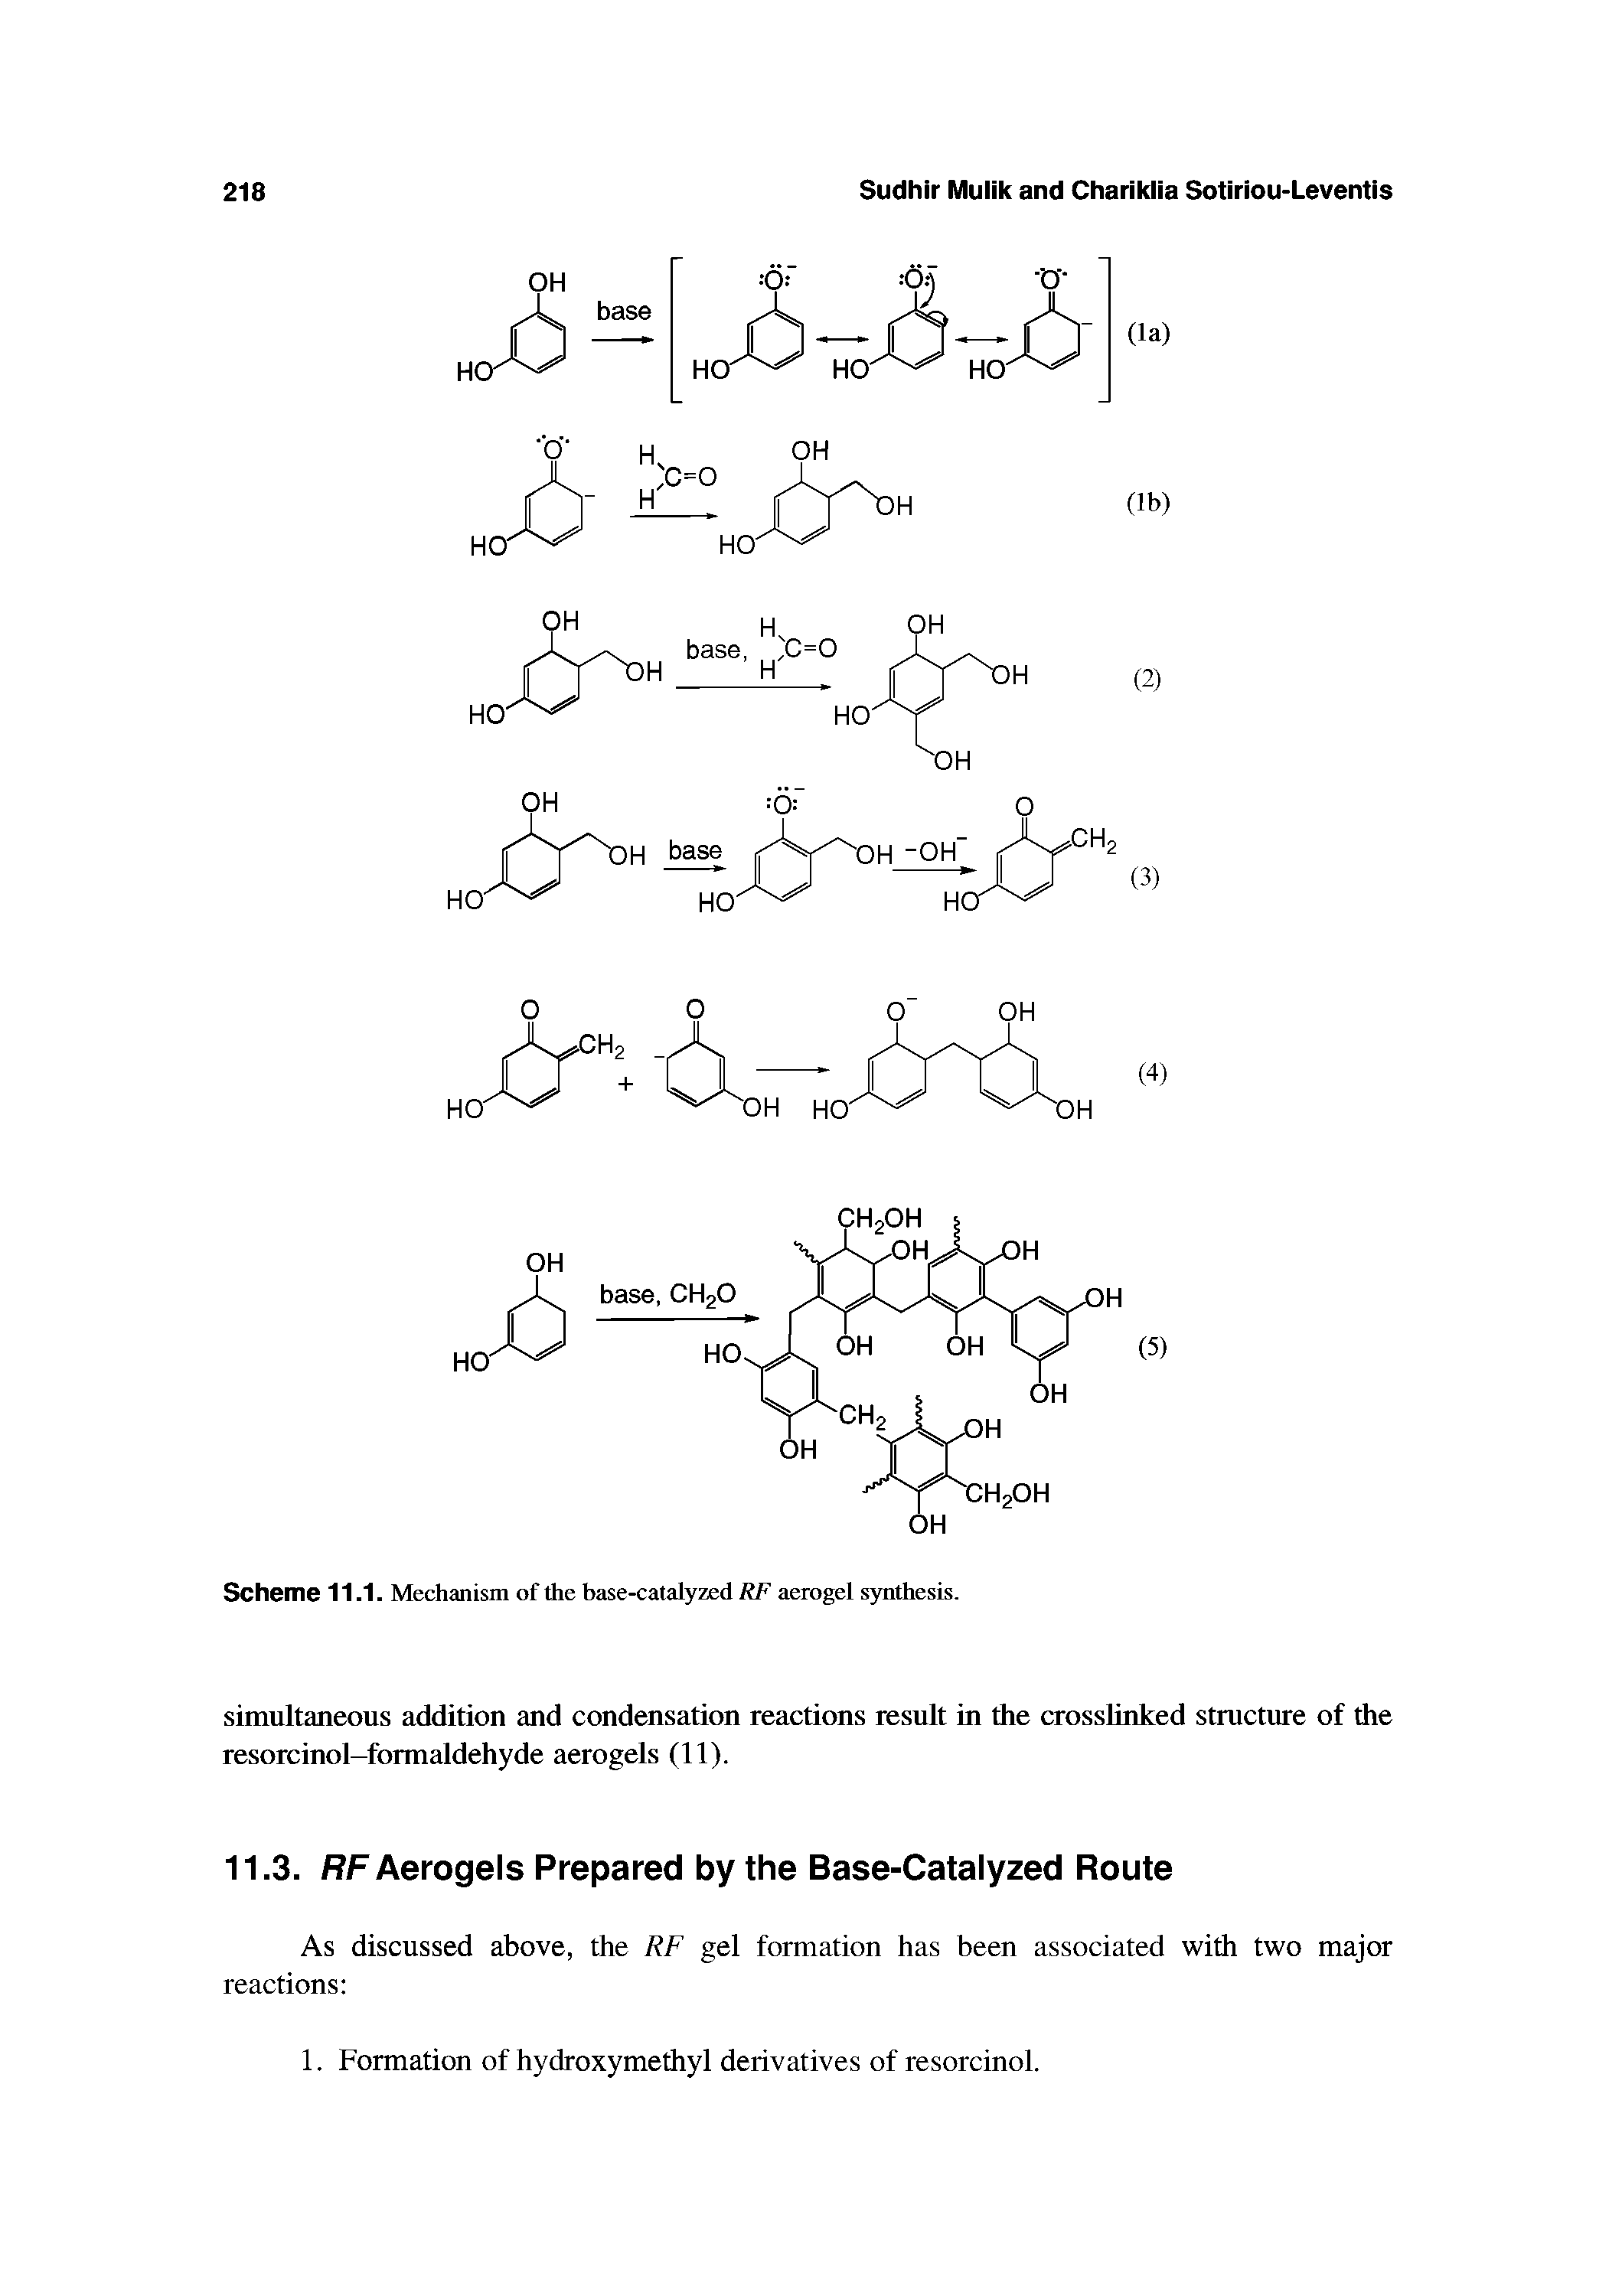 Scheme 11.1. Mechanism of the base-catalyzed RF aerogel synthesis.